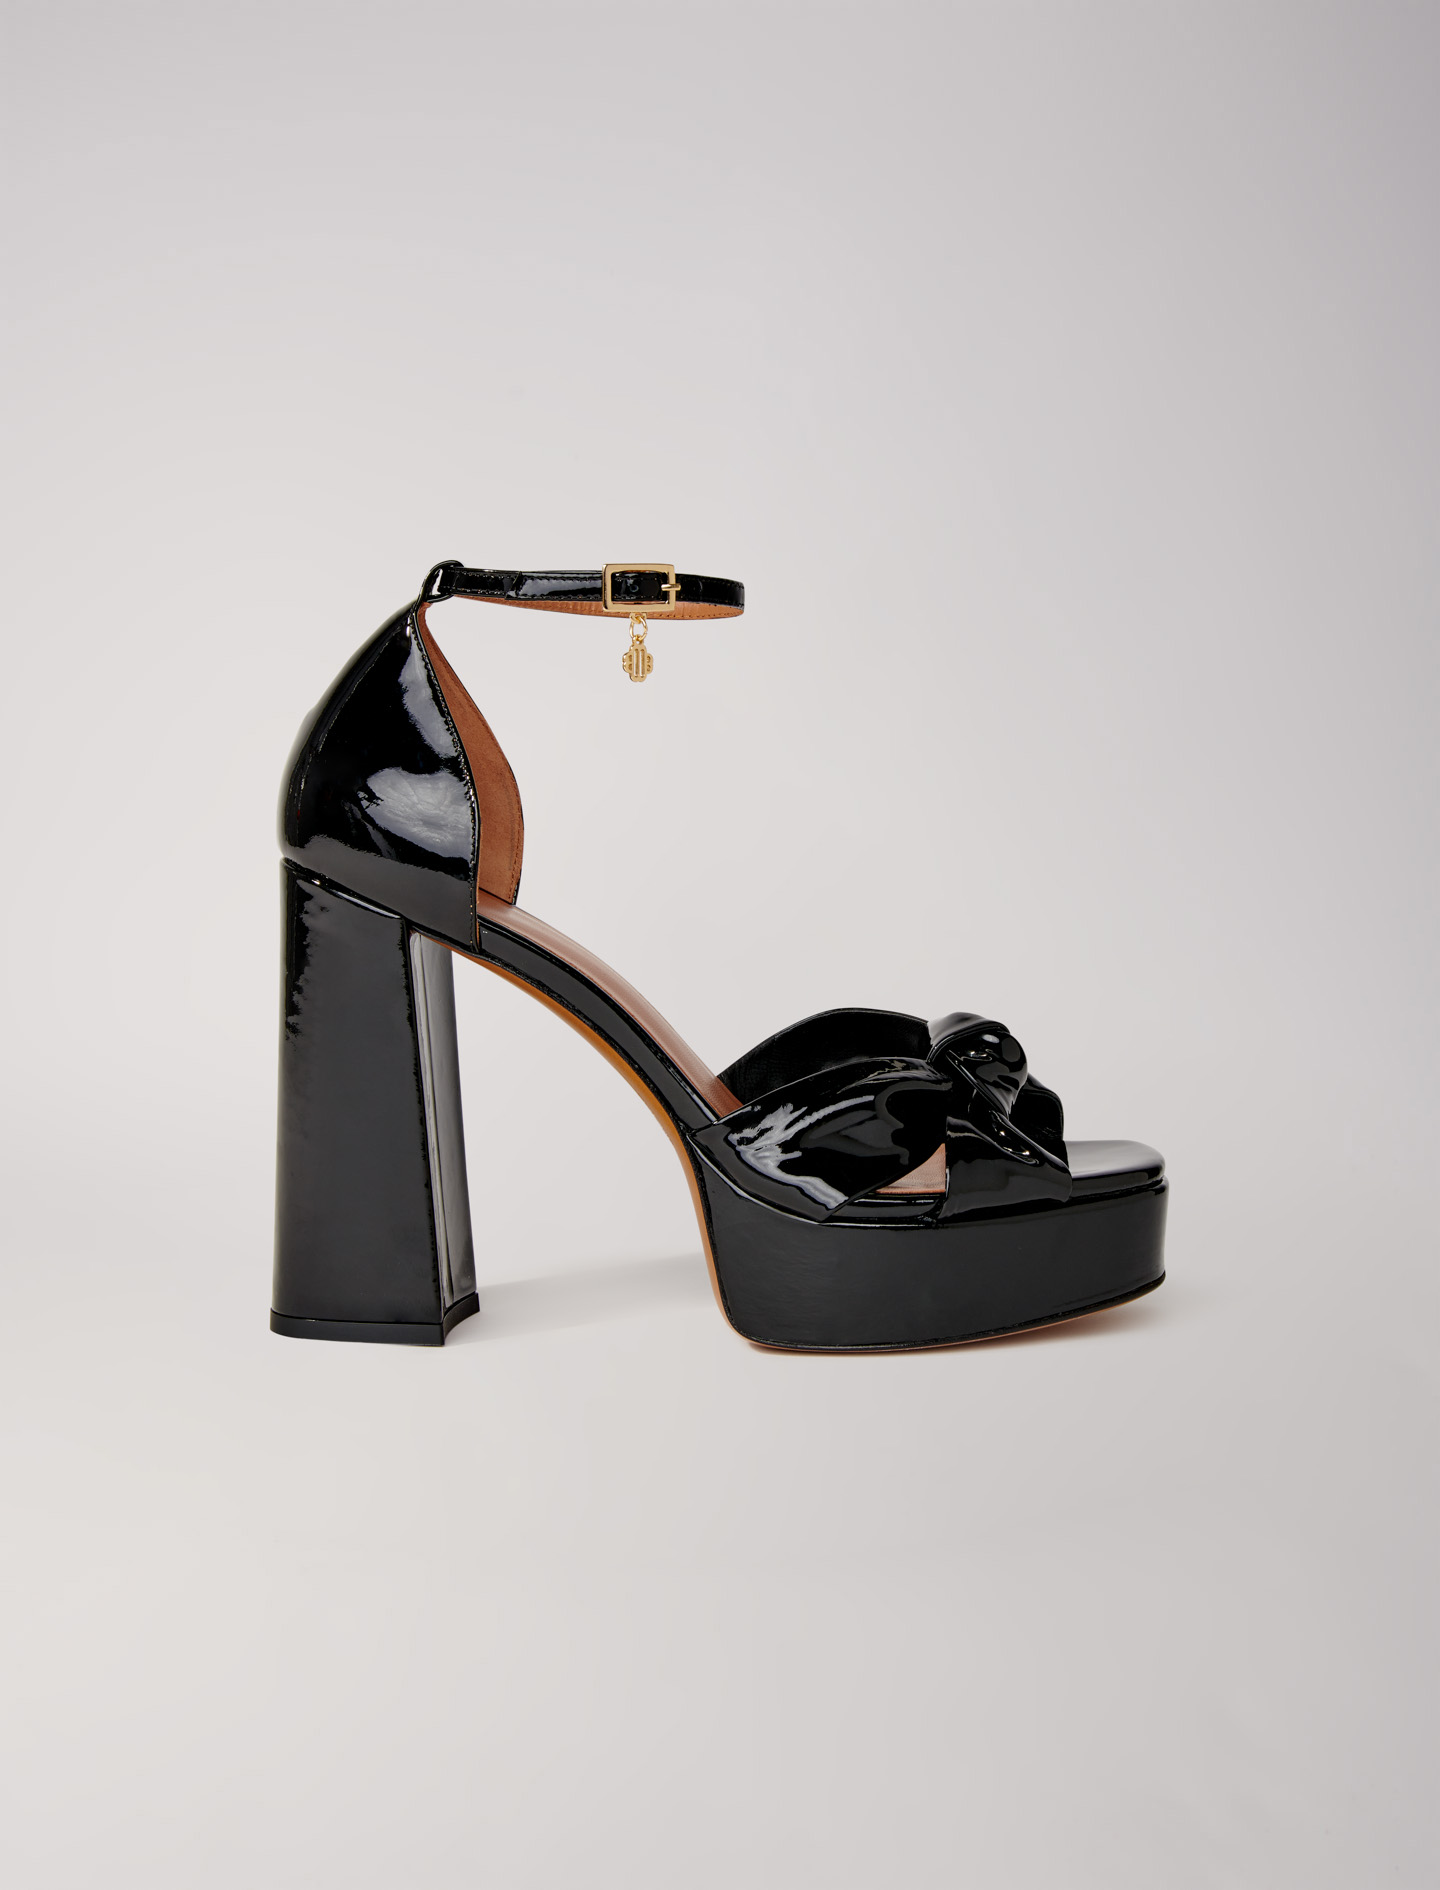 Maje Woman's goat Outer: Leather platform sandals, in color Black / Black